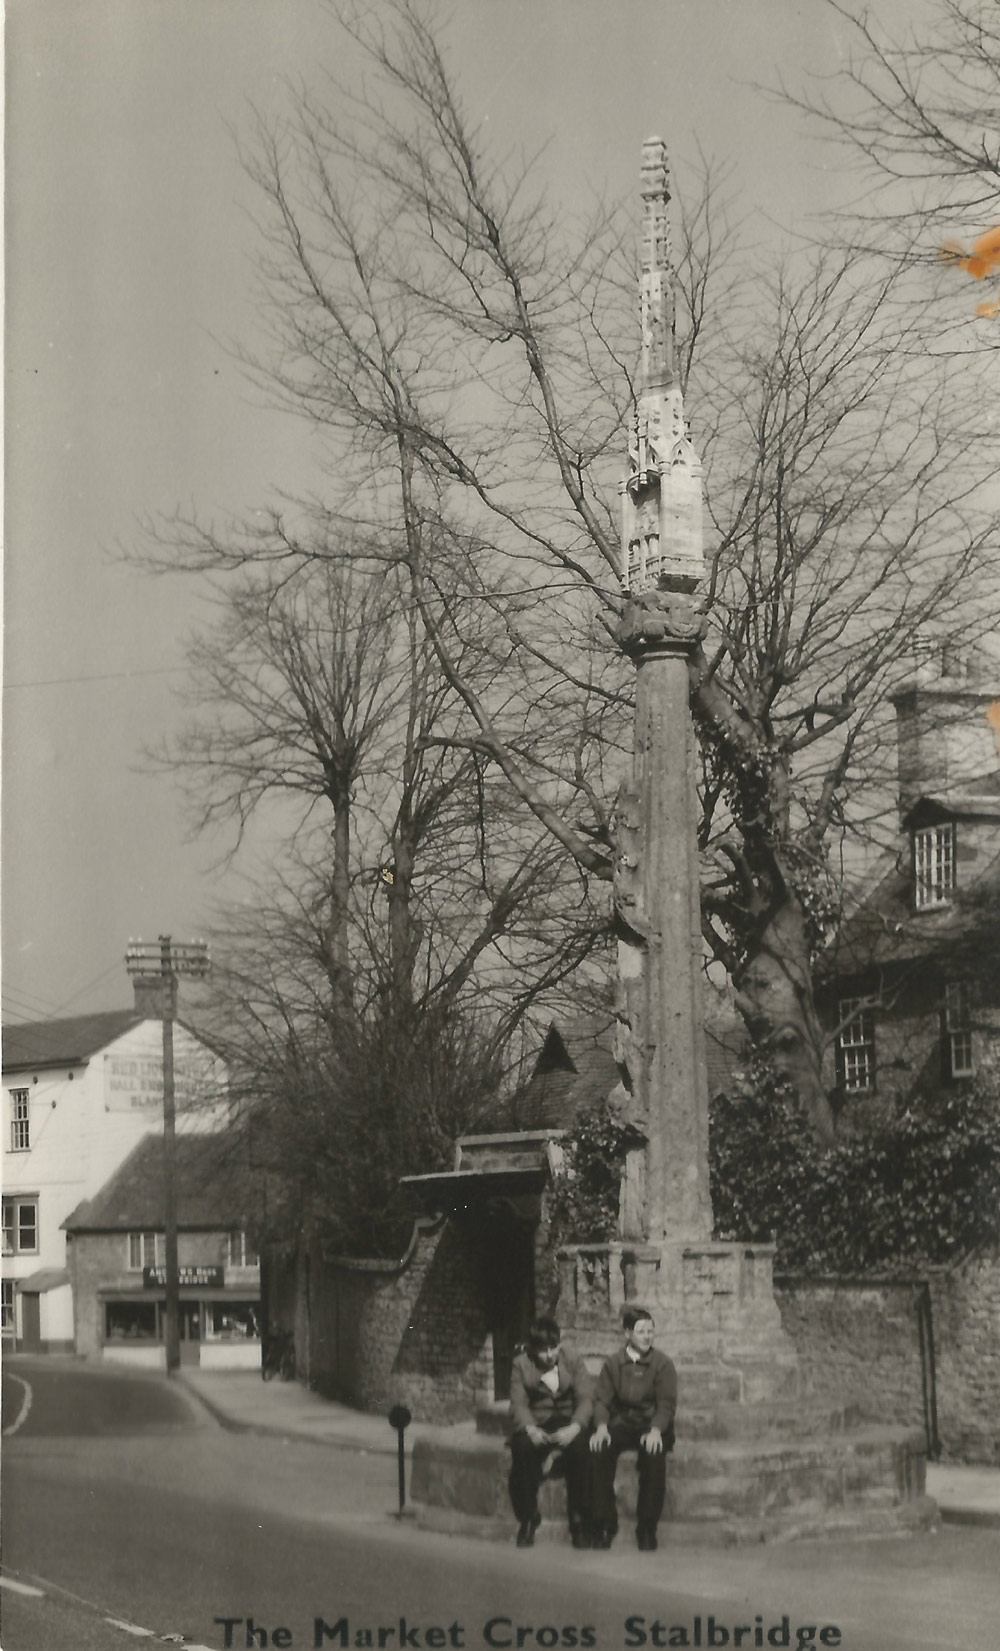 Stalbridge Market Cross with its new top, 1950 early 1960s (Stalbridge Archive, courtesy Stalbridge Town Council)